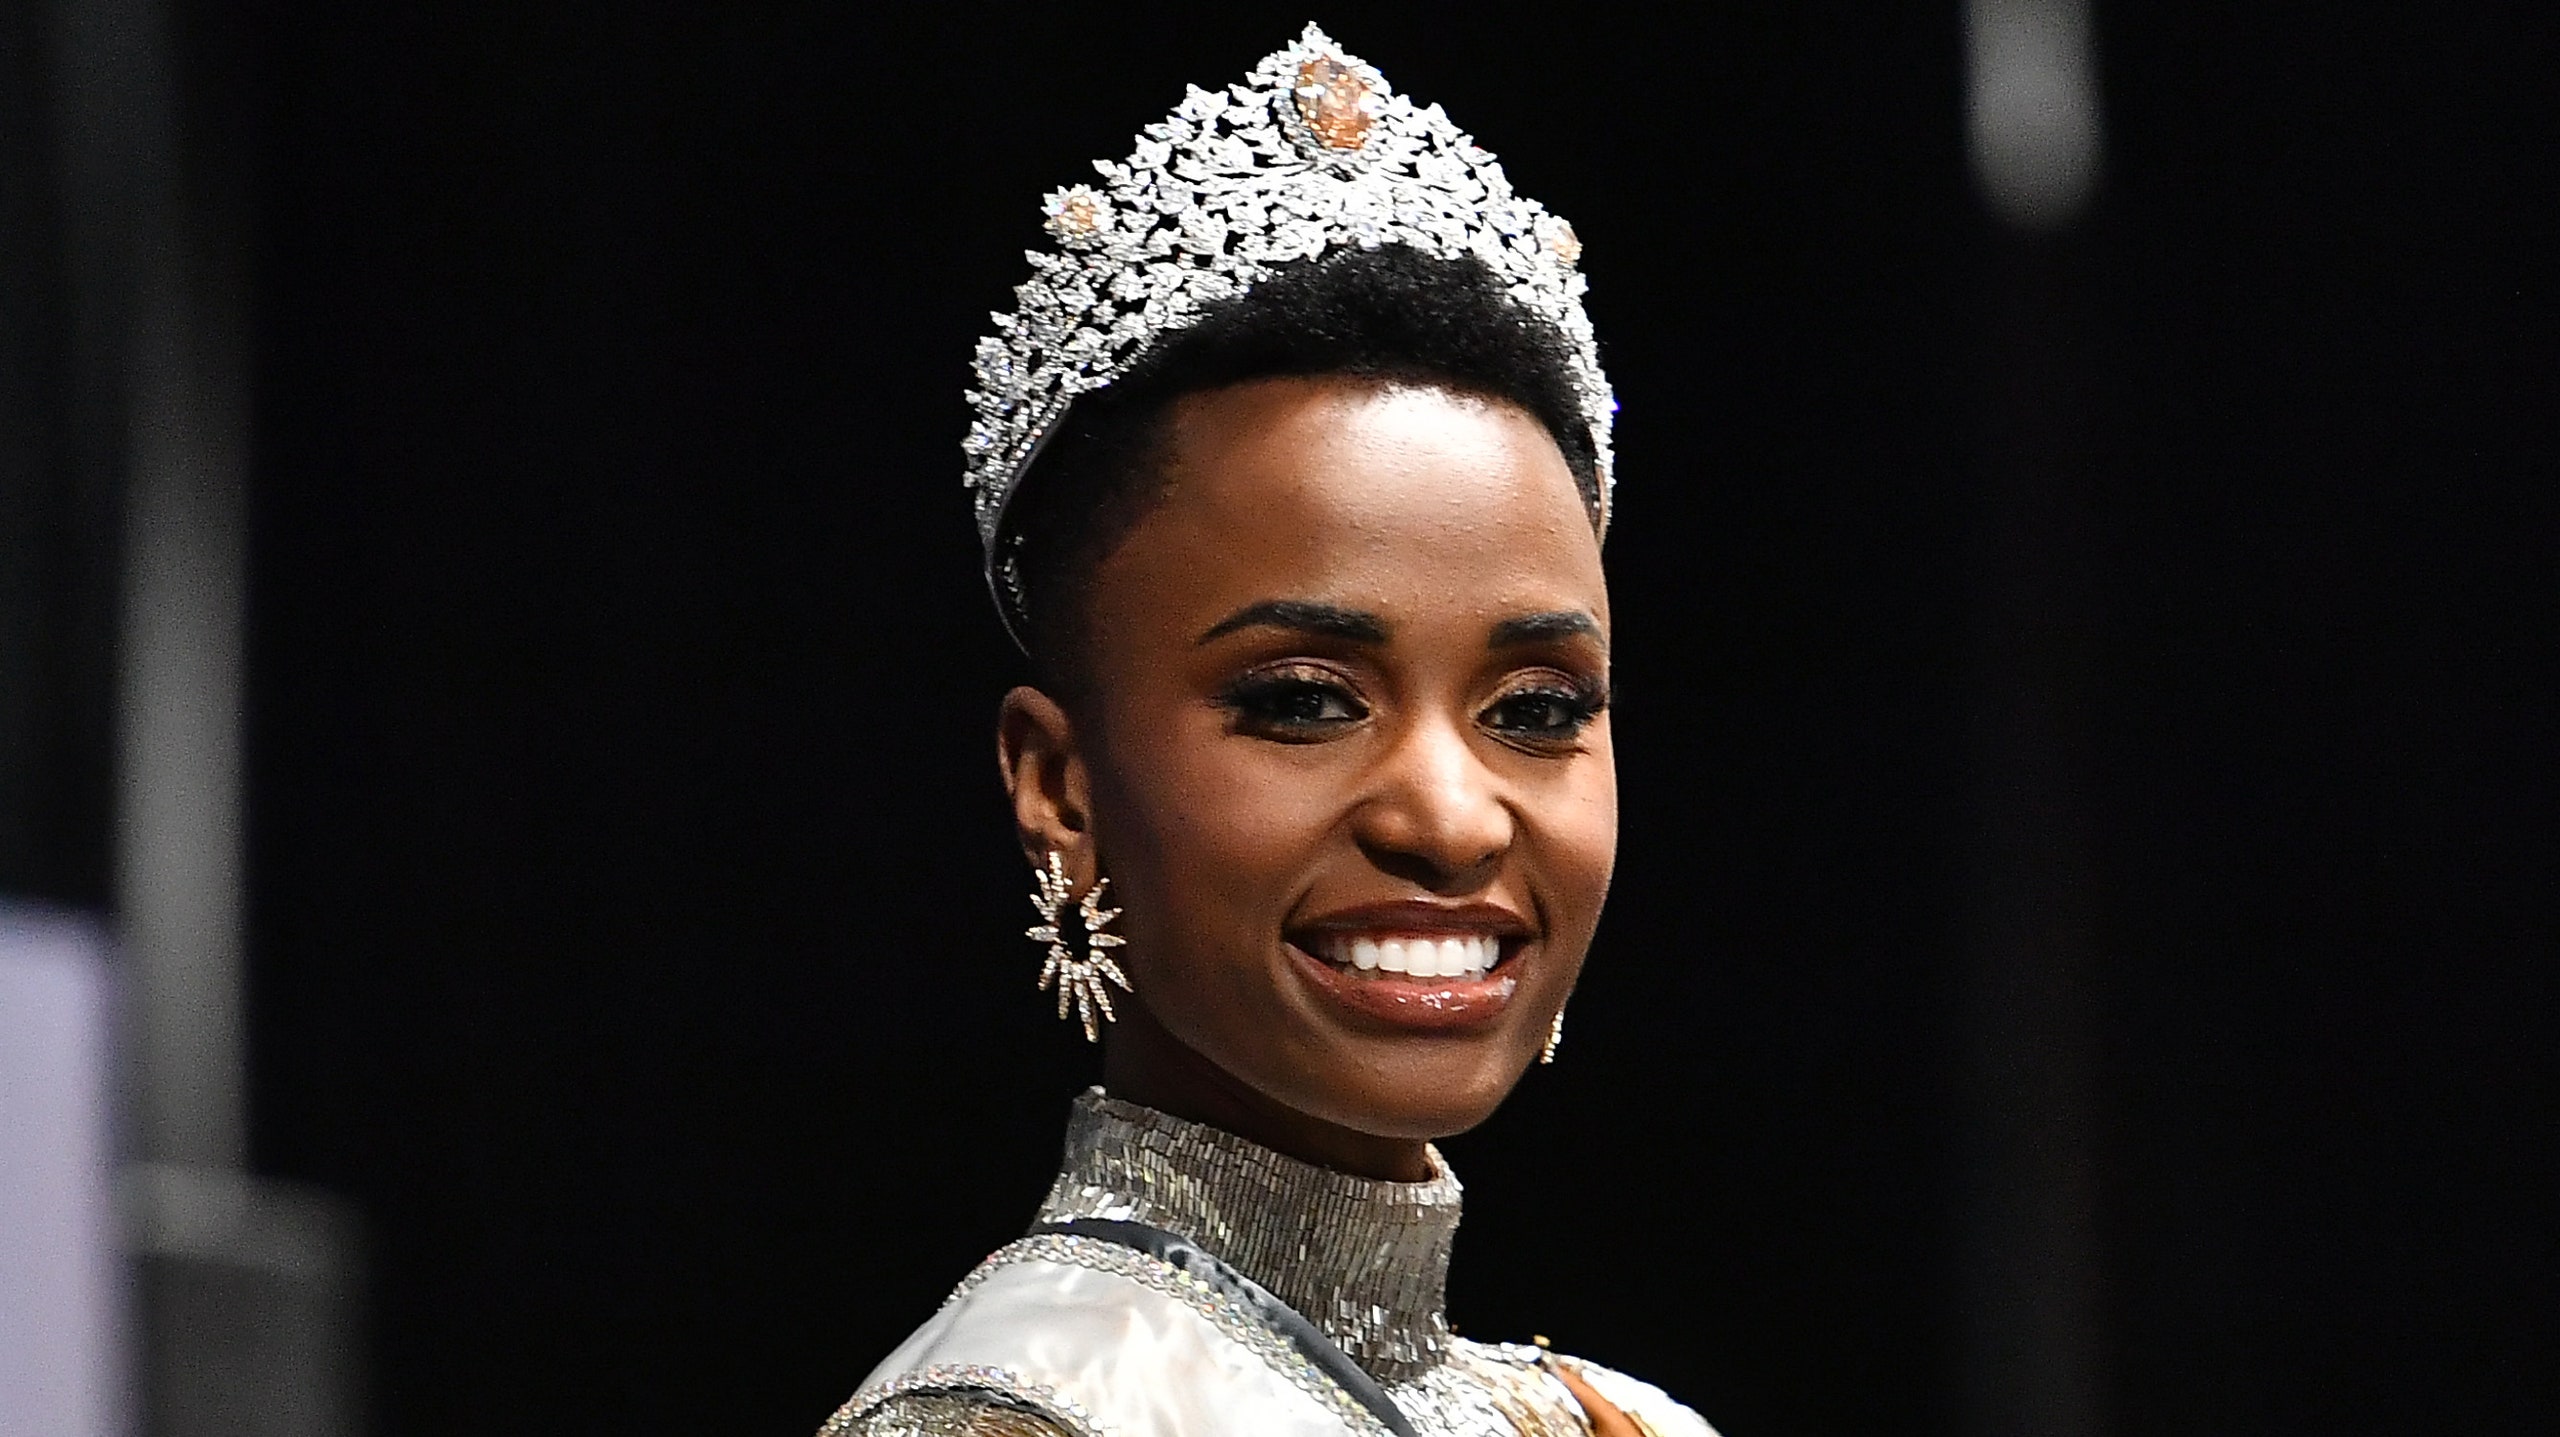 Представительница ЮАР Зозибини Тунци завоевала титул «Мисс Вселенная» 2019